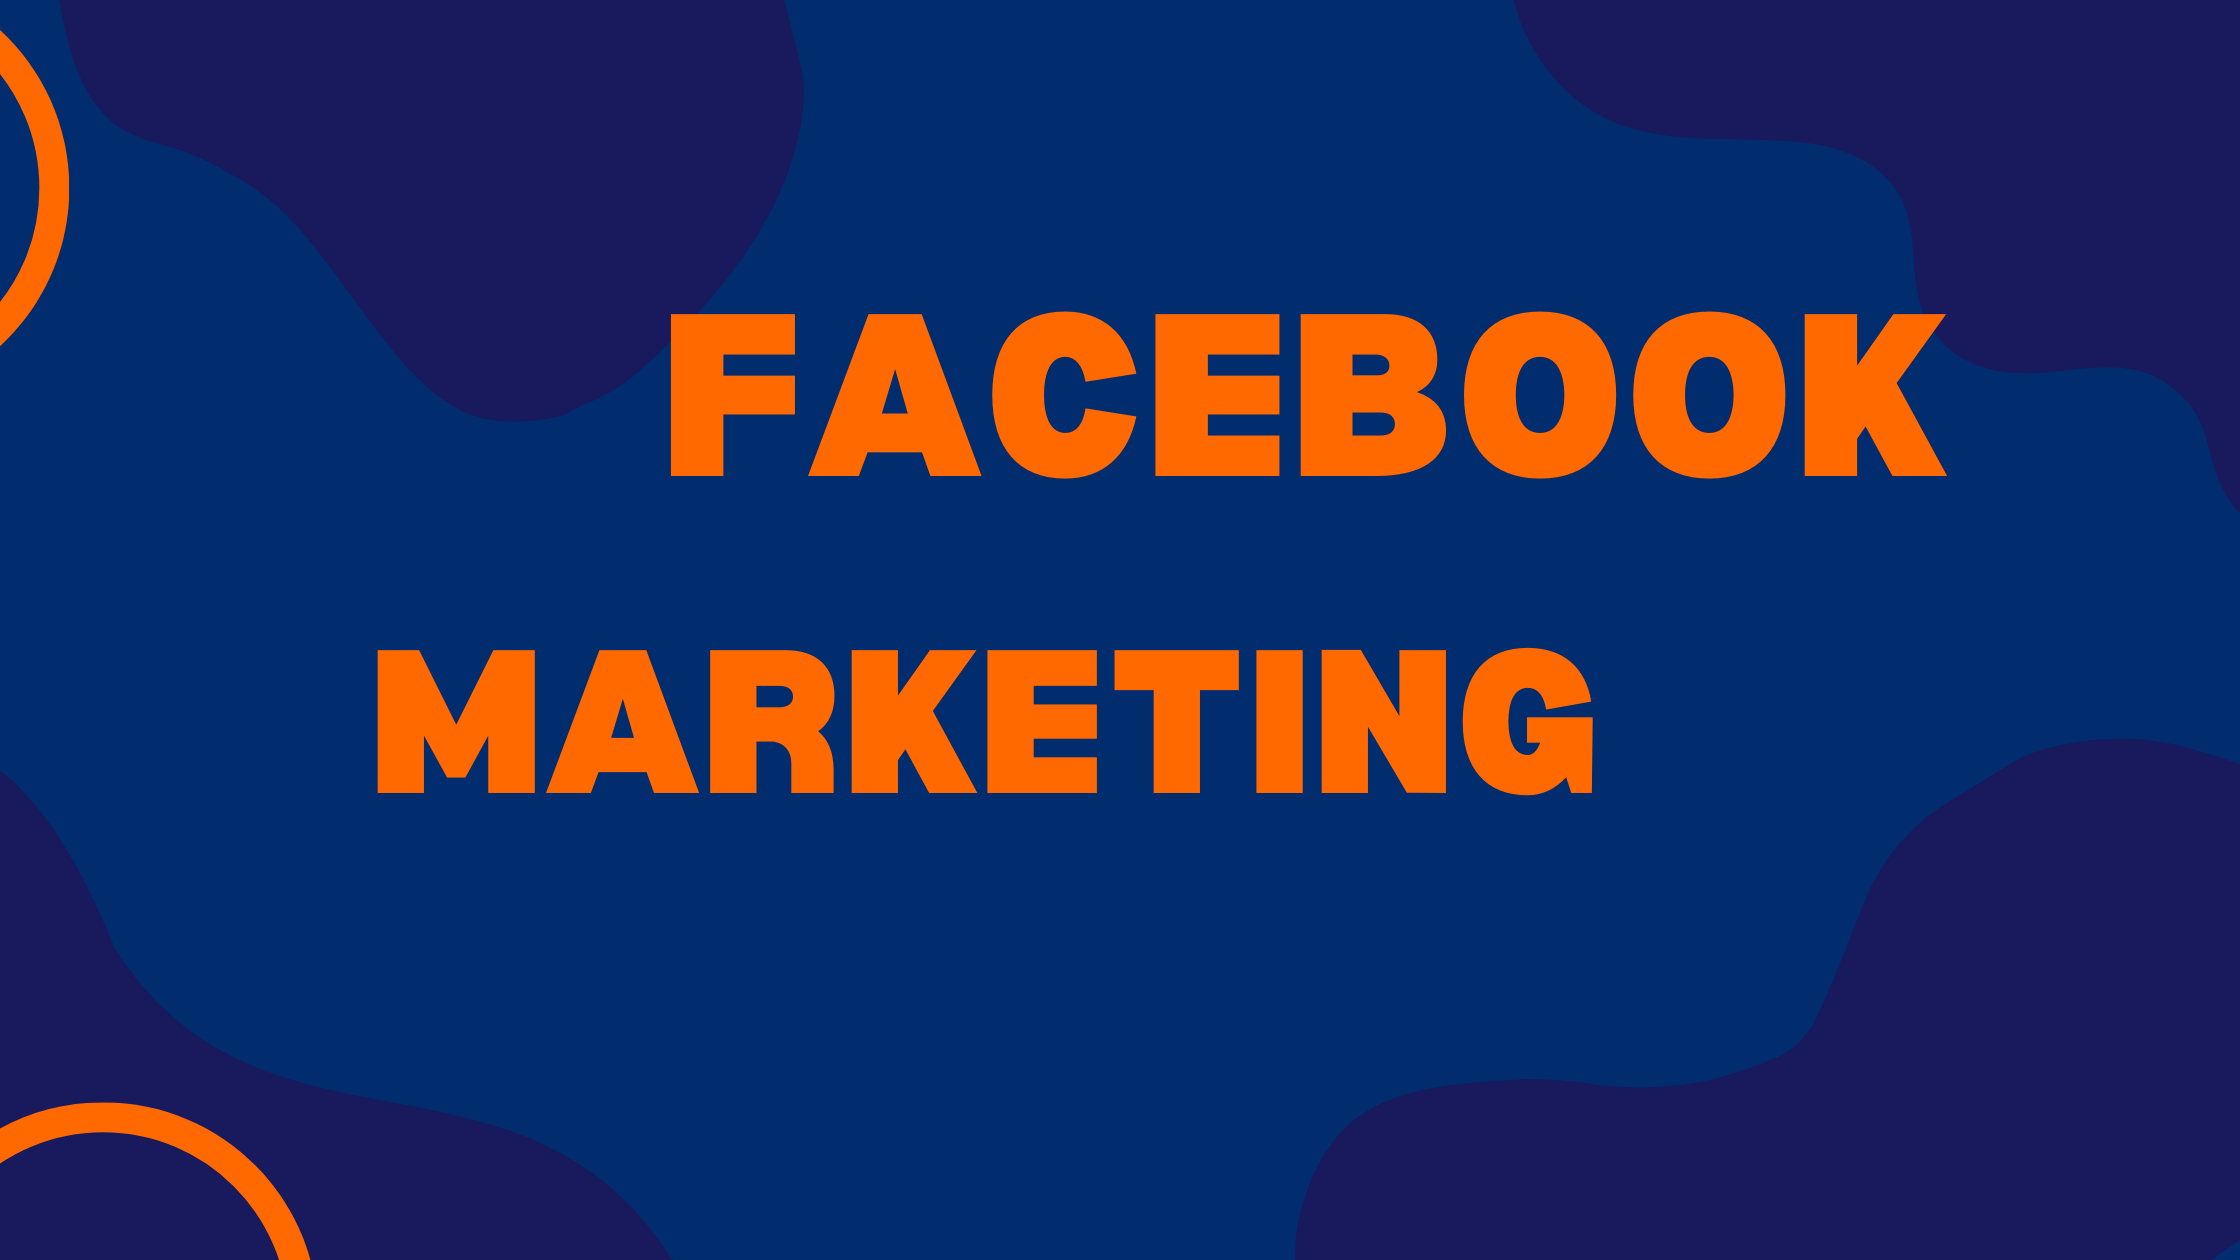 Facebook for Marketing